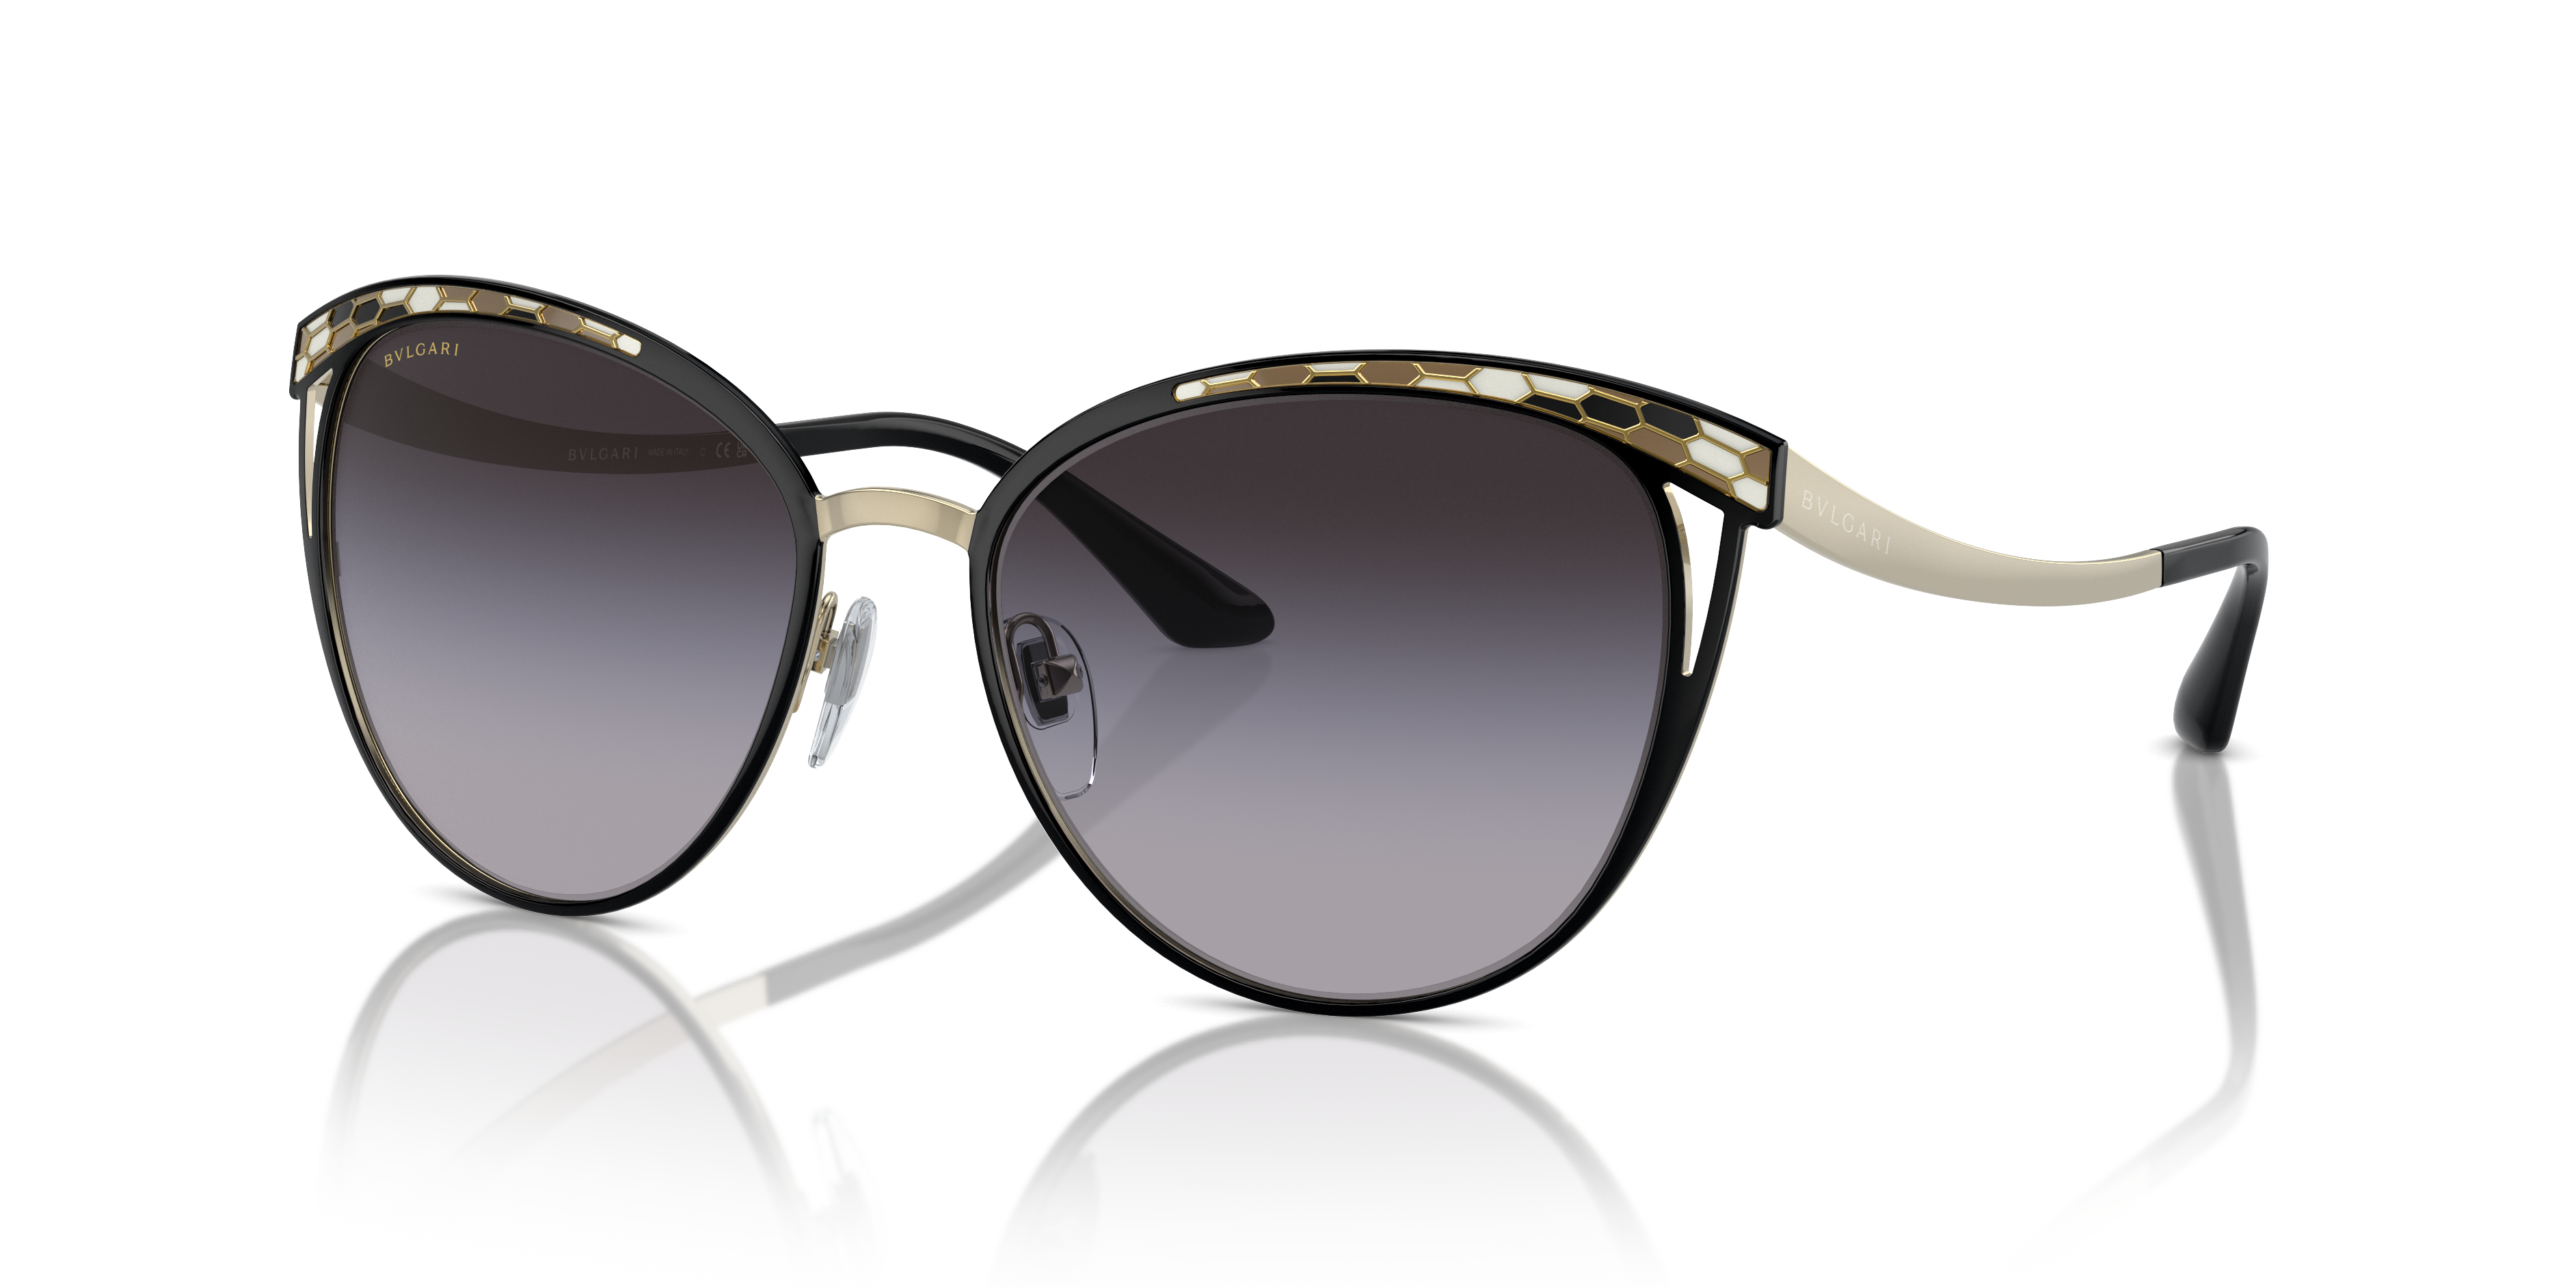 Bvlgari Sunglasses 8144-B 501/8G 57-19 140 3N Black (No case) | eBay